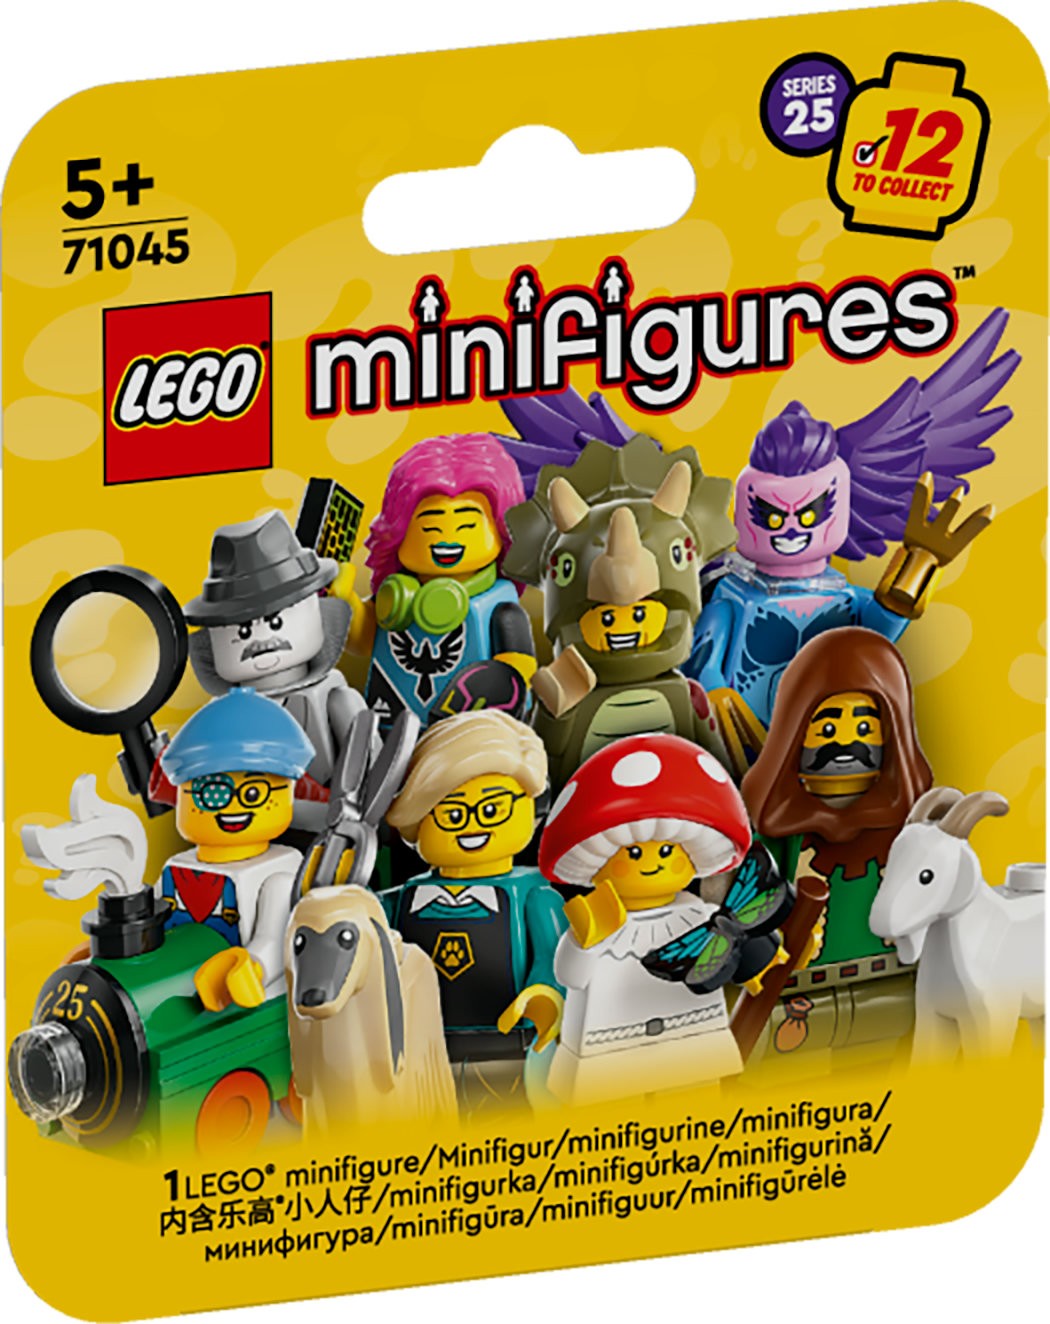 LEGO MINIFIGURES SERIES 25 71045 AGE: 5+